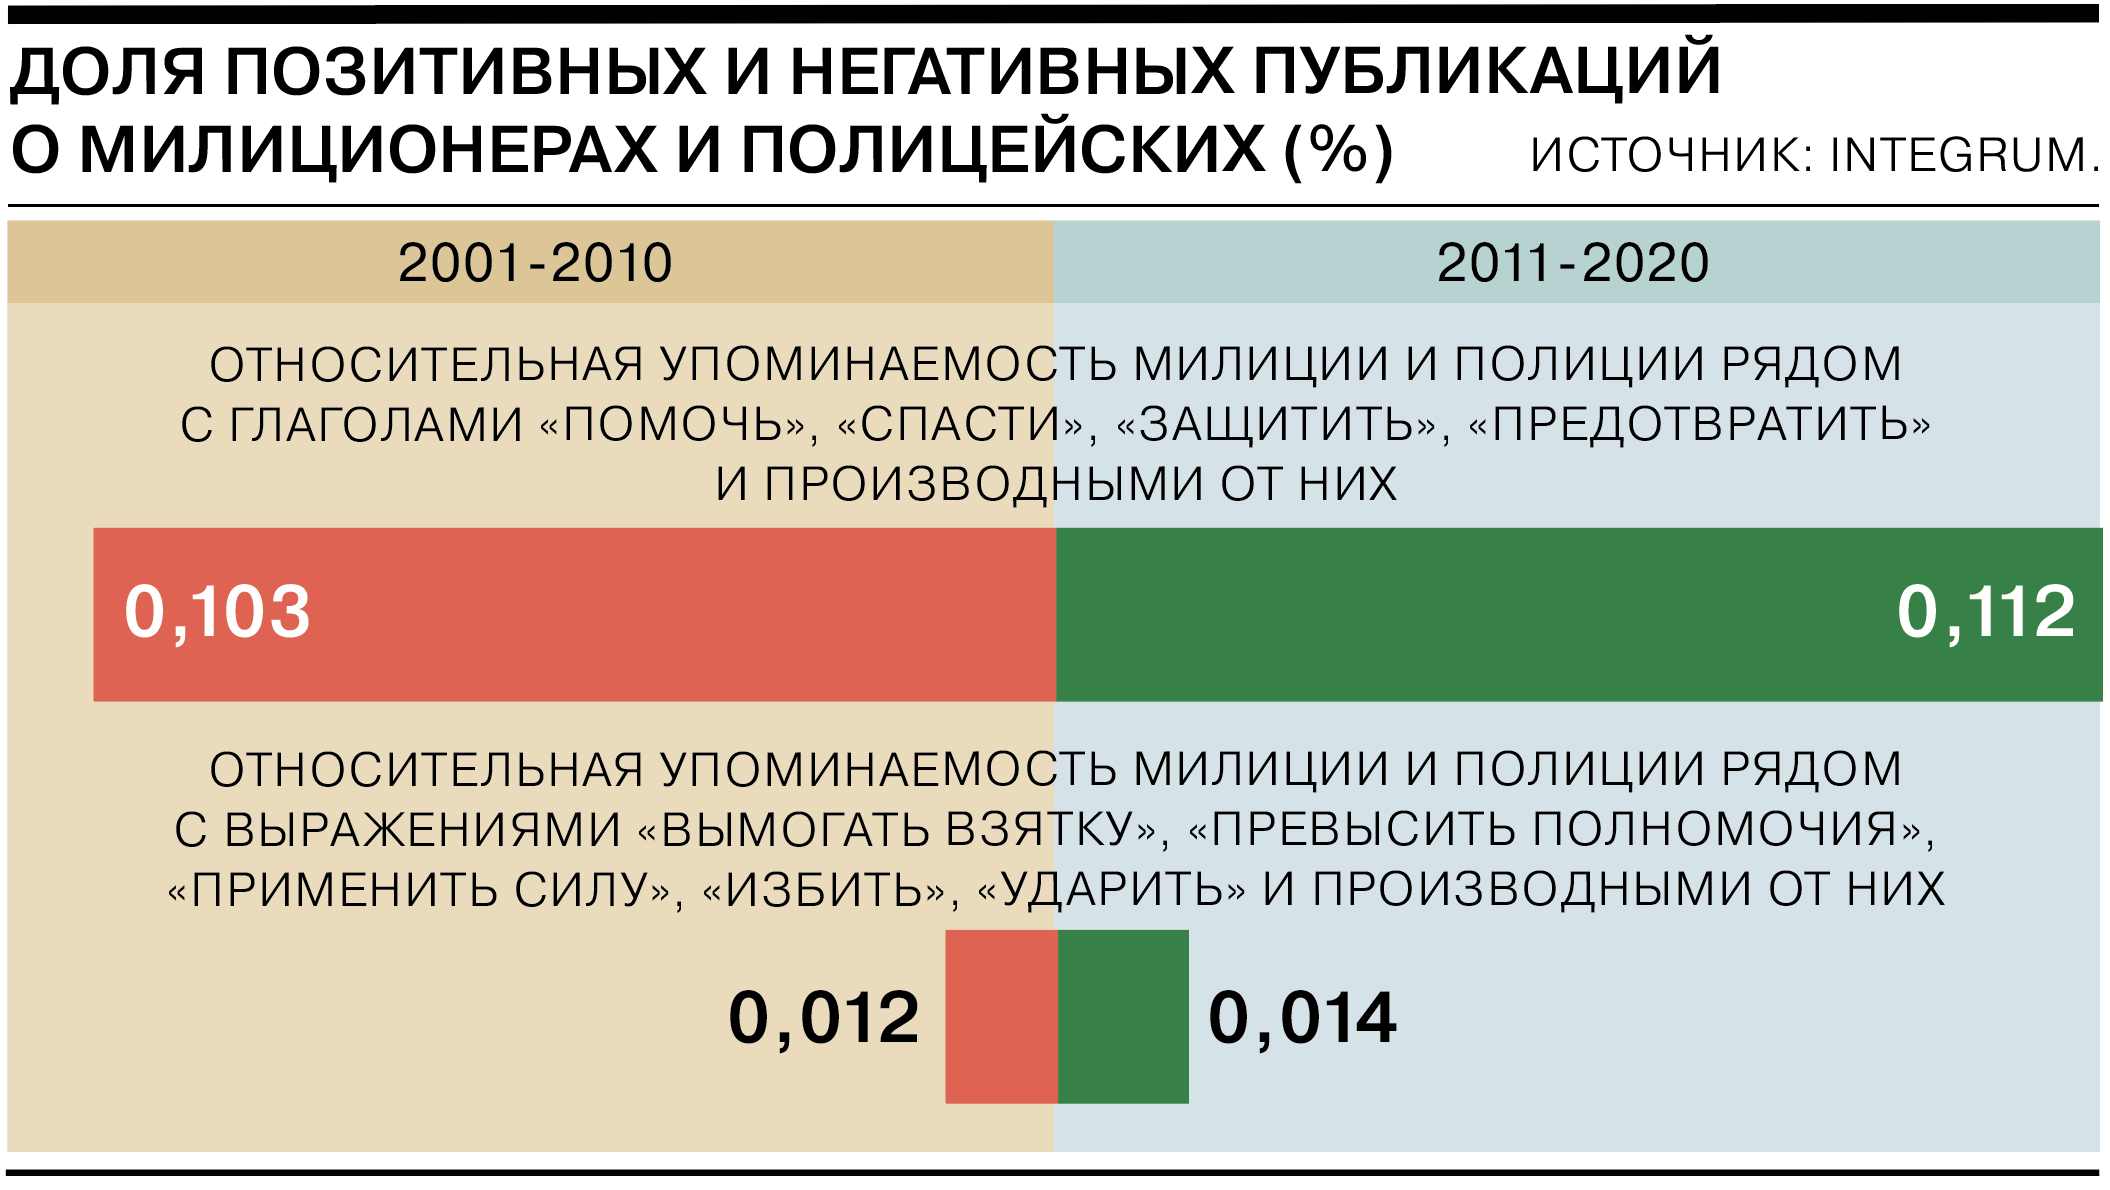 https://im.kommersant.ru/ISSUES.PHOTO/CORP/2021/02/05/8%D0%BF%D0%BE%D0%B7%D0%B8%D1%82%D0%B8%D0%B2.png